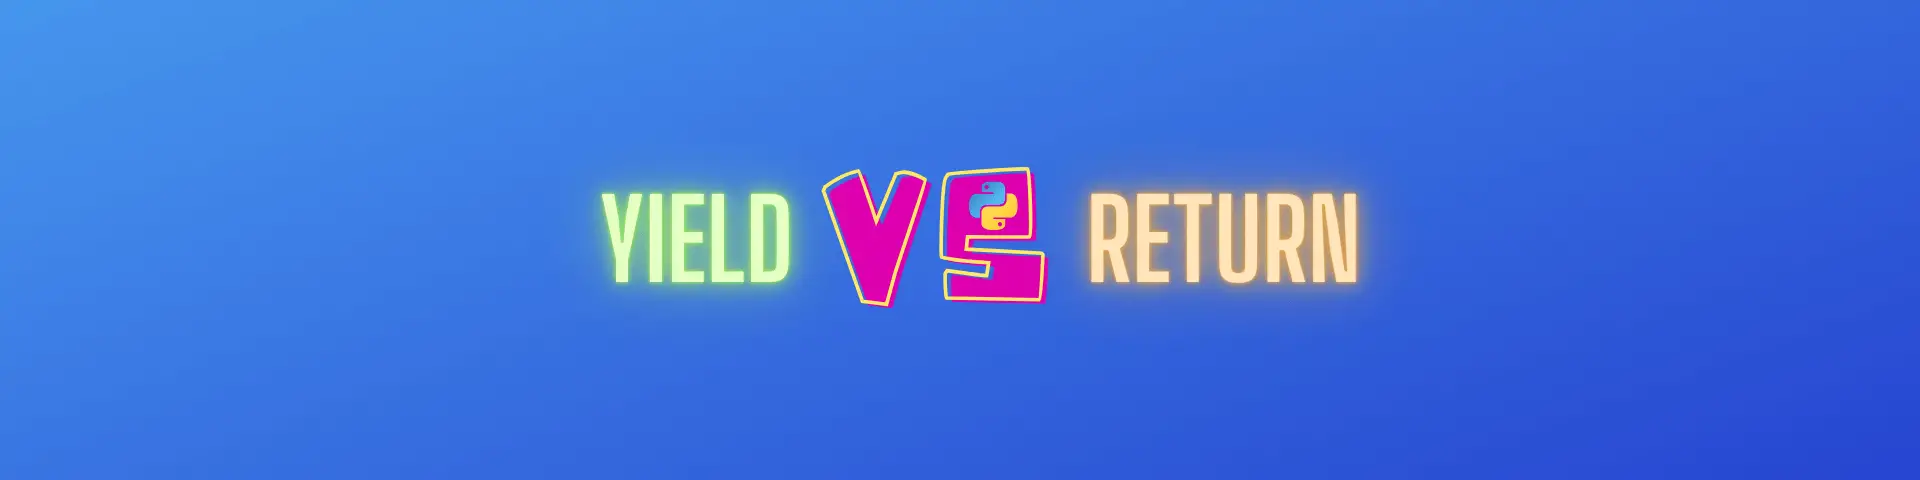 Python yield vs return